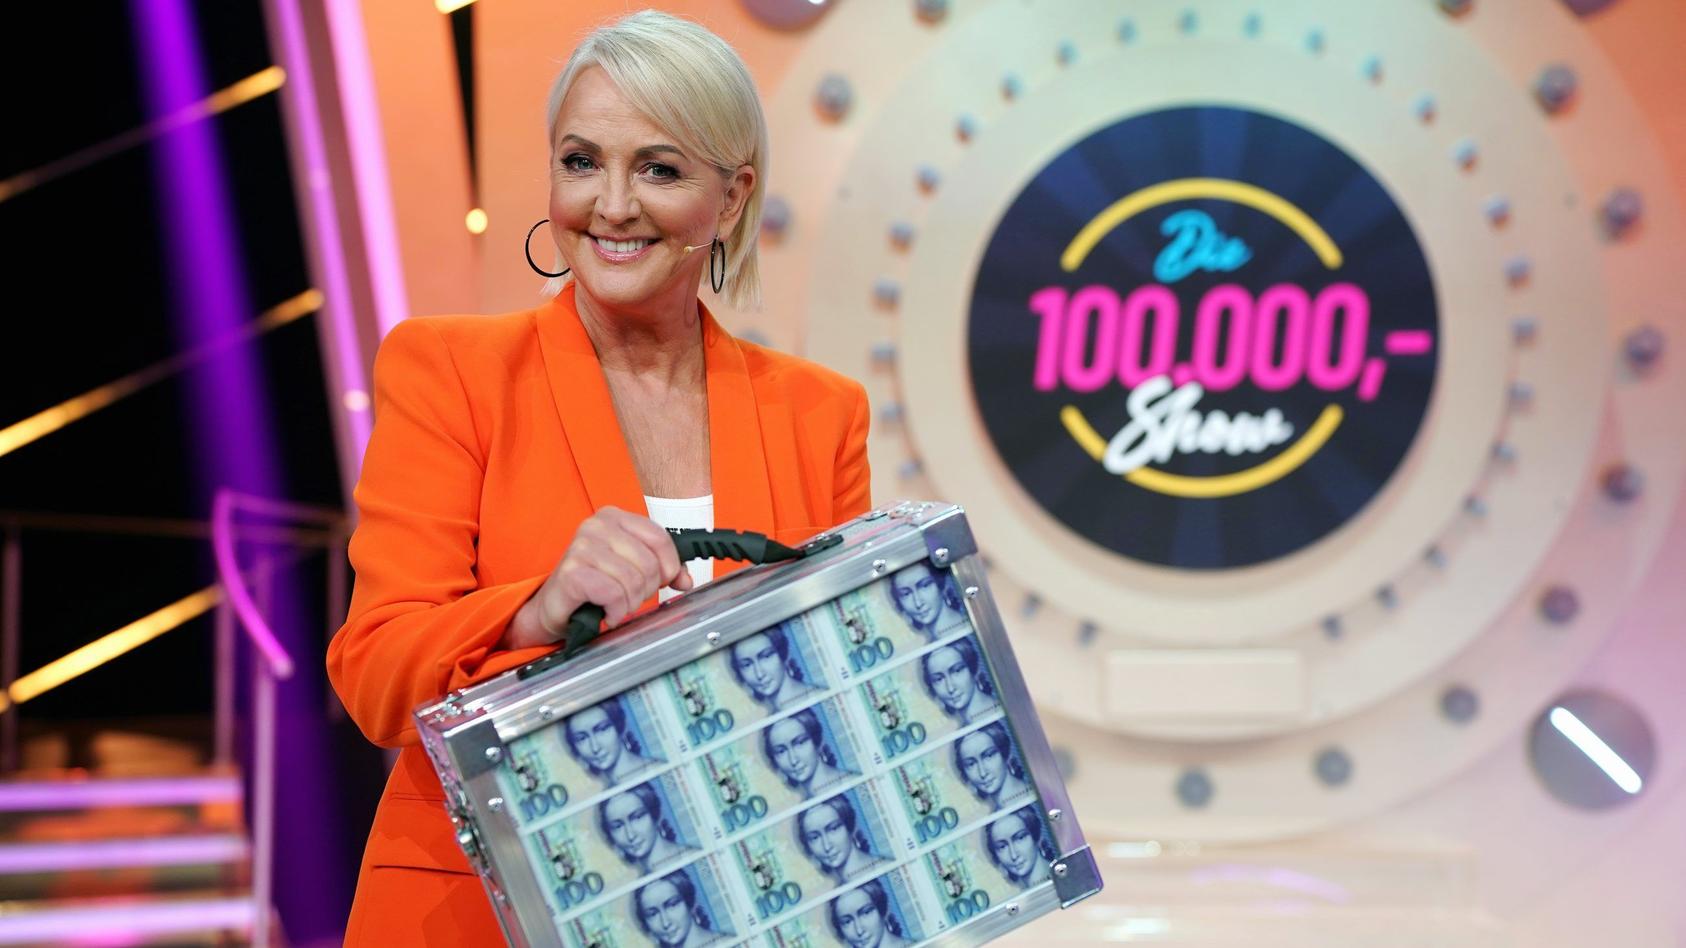 Ulla Kock am Brink hält Geldkoffer vor dem Logo der "100.000 Mark Show"